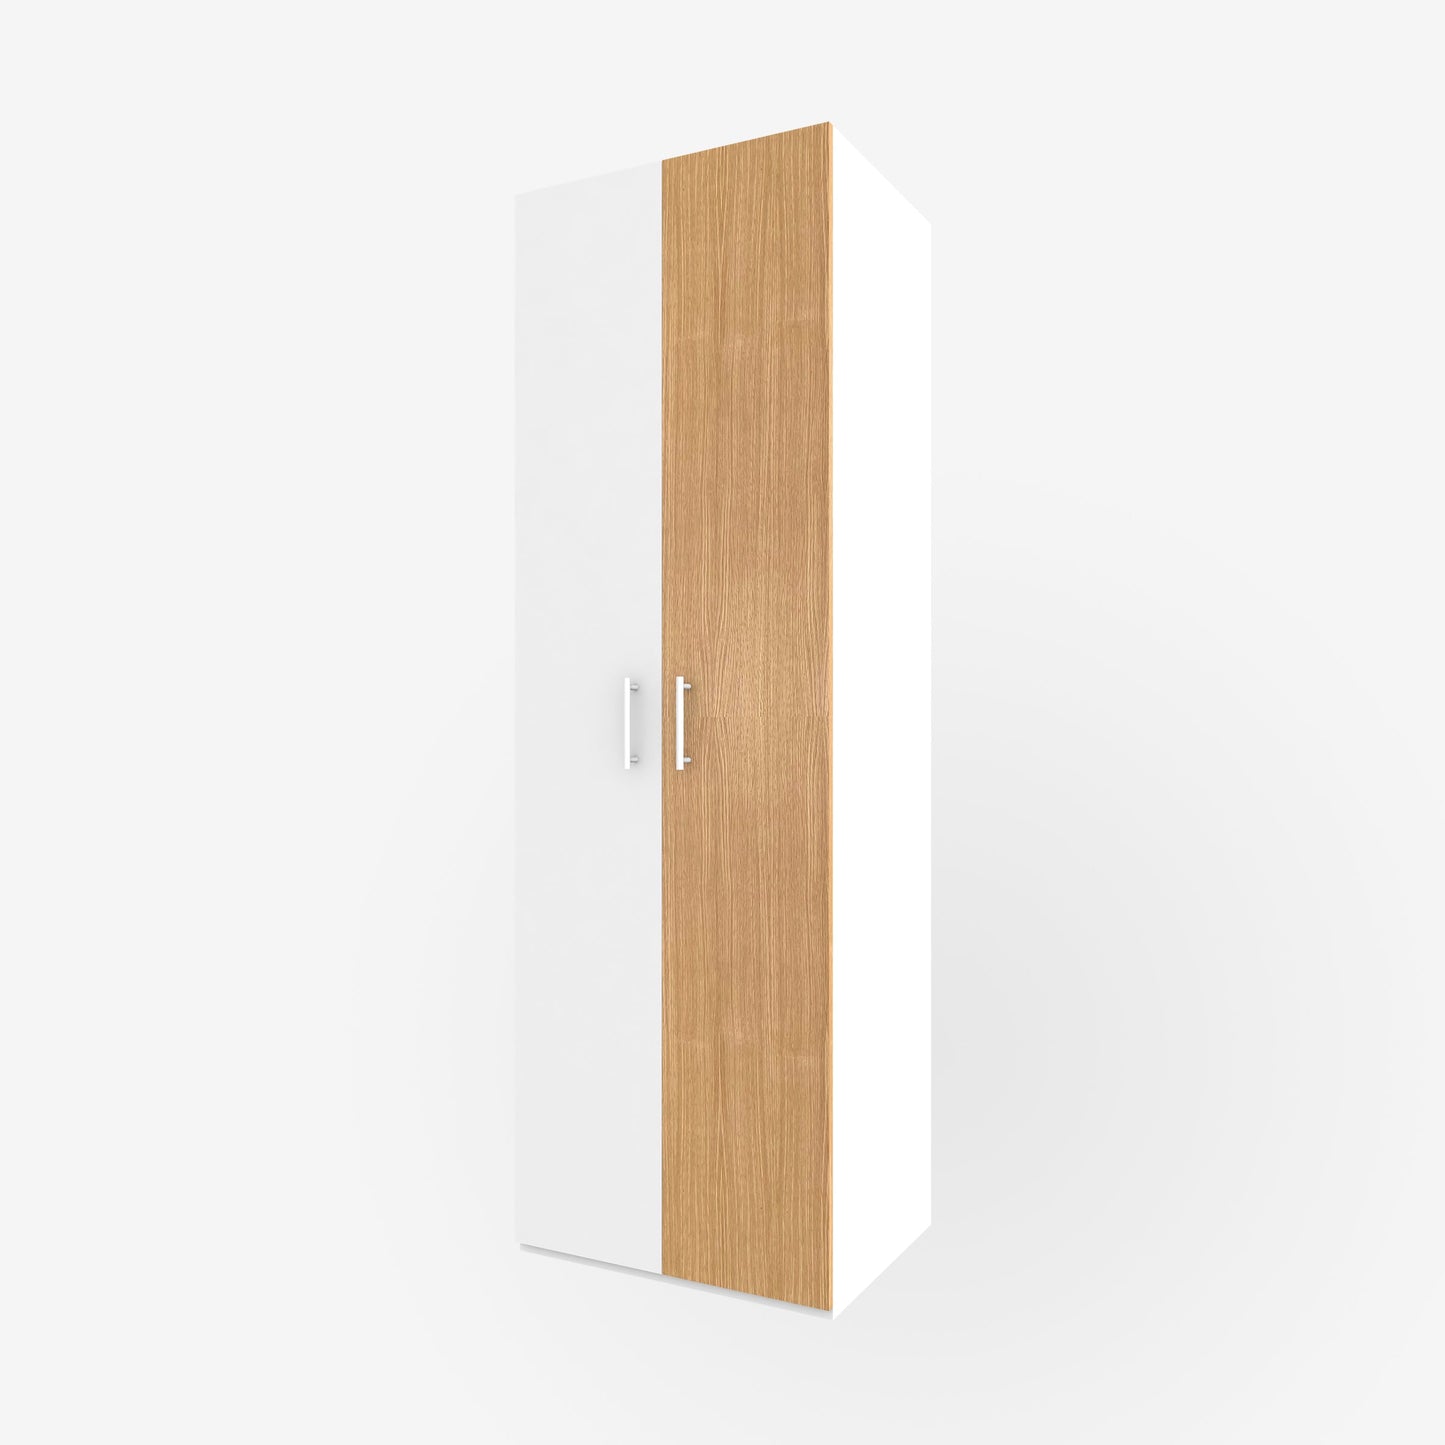 15" x 93" real wood veneer white oak slab door for Ikea or Swedeboxx pax closet cabinet